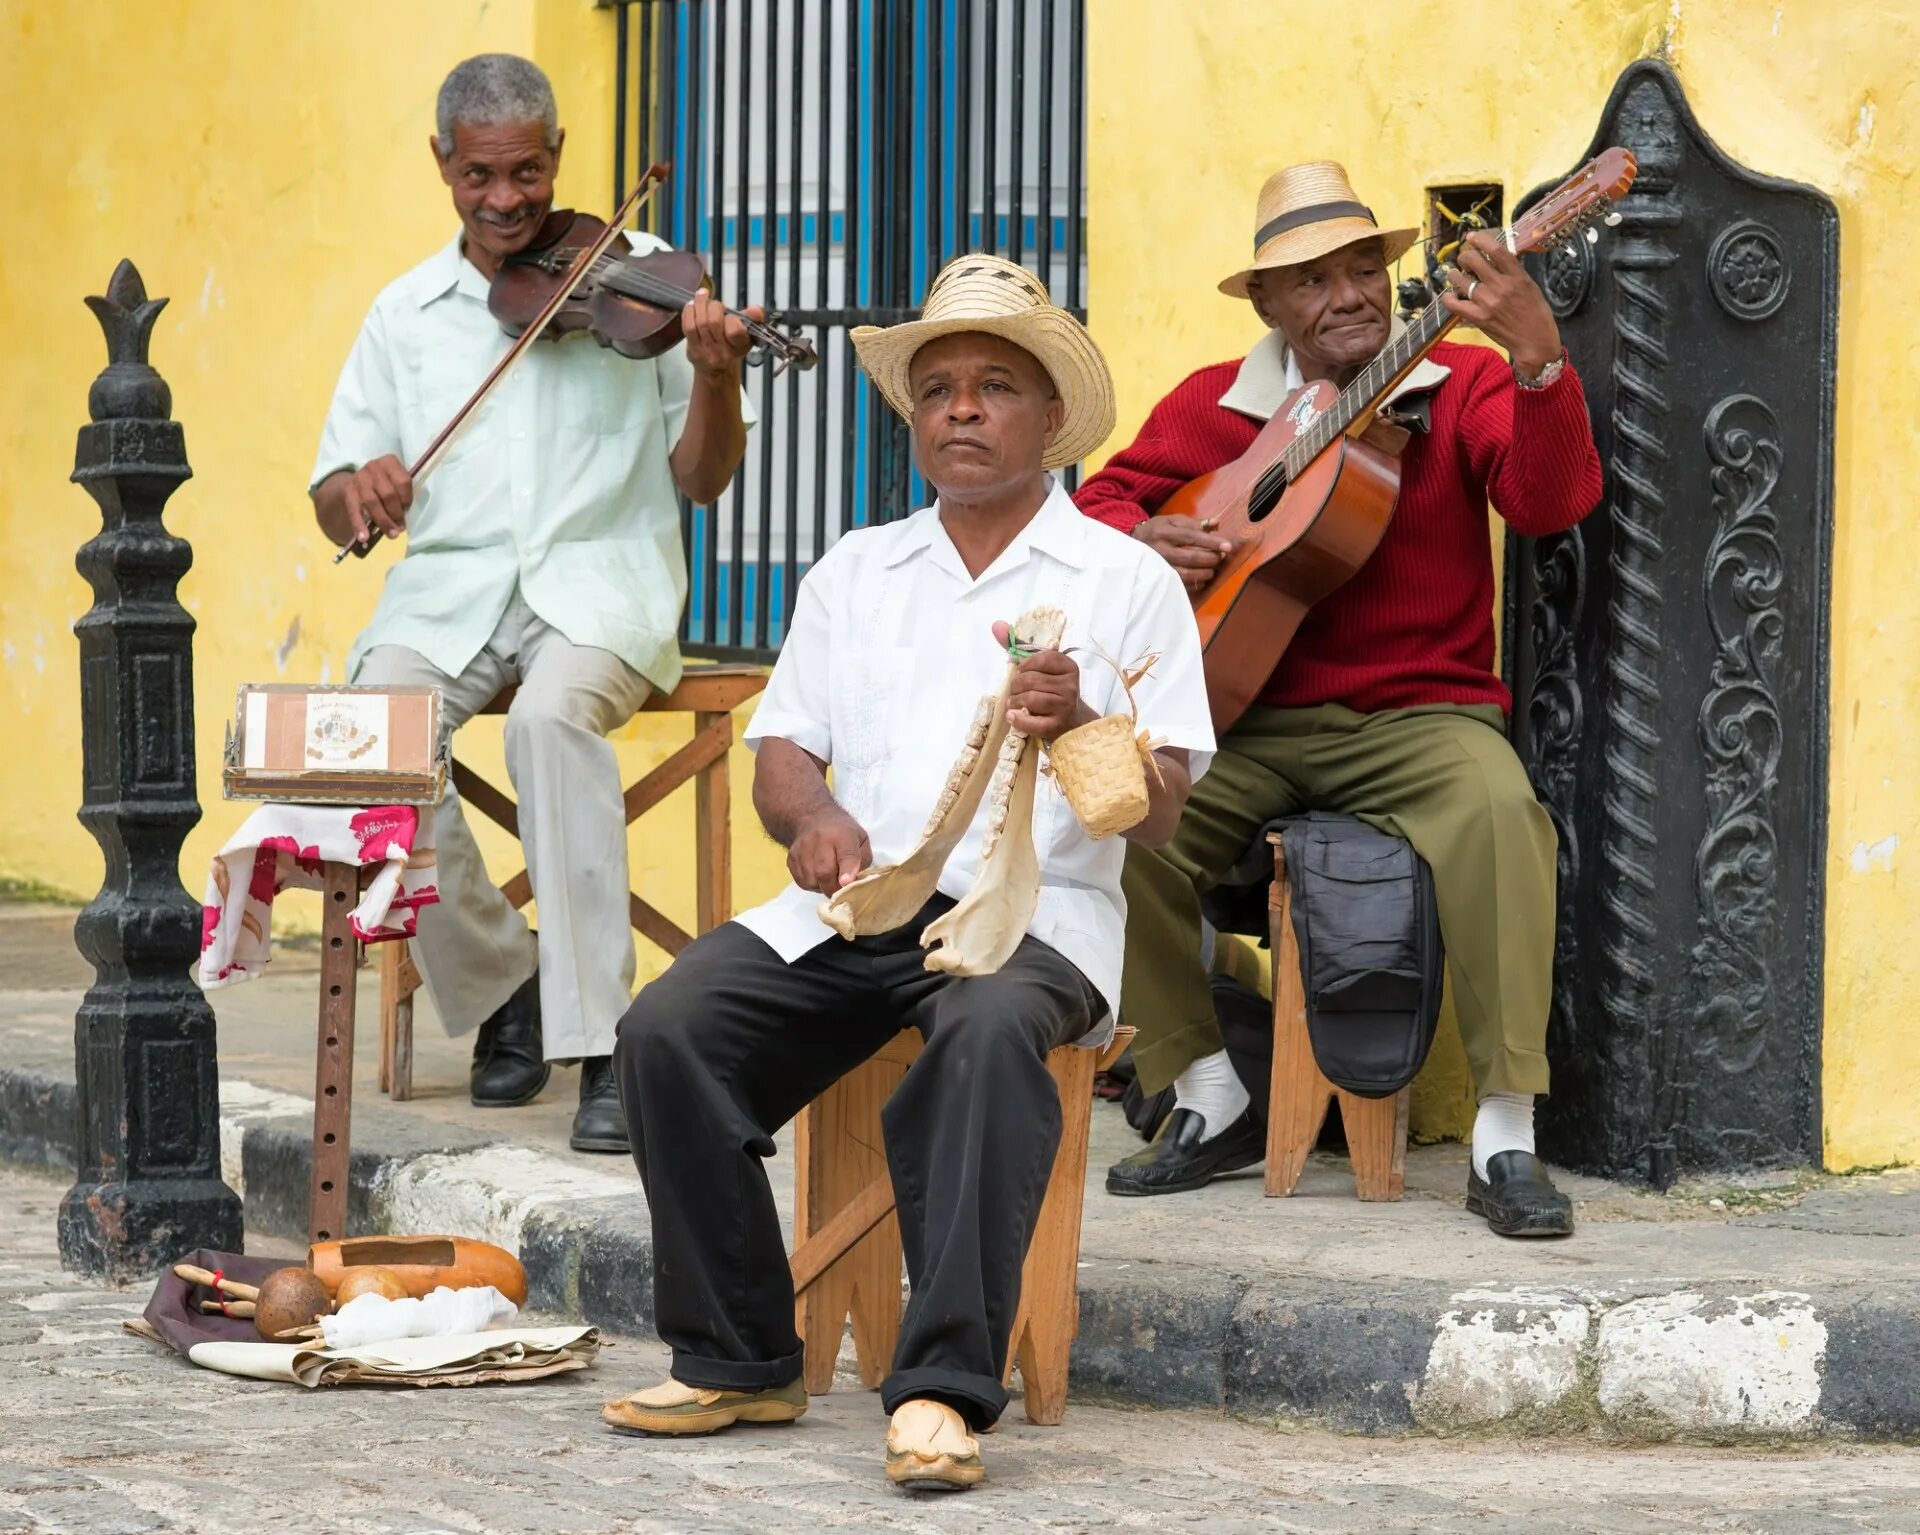 Кубинские песни слушать. Гавана музыканты. Куба музыканты. Куба танцы уличные музыканты. Музыканты из Кубы.